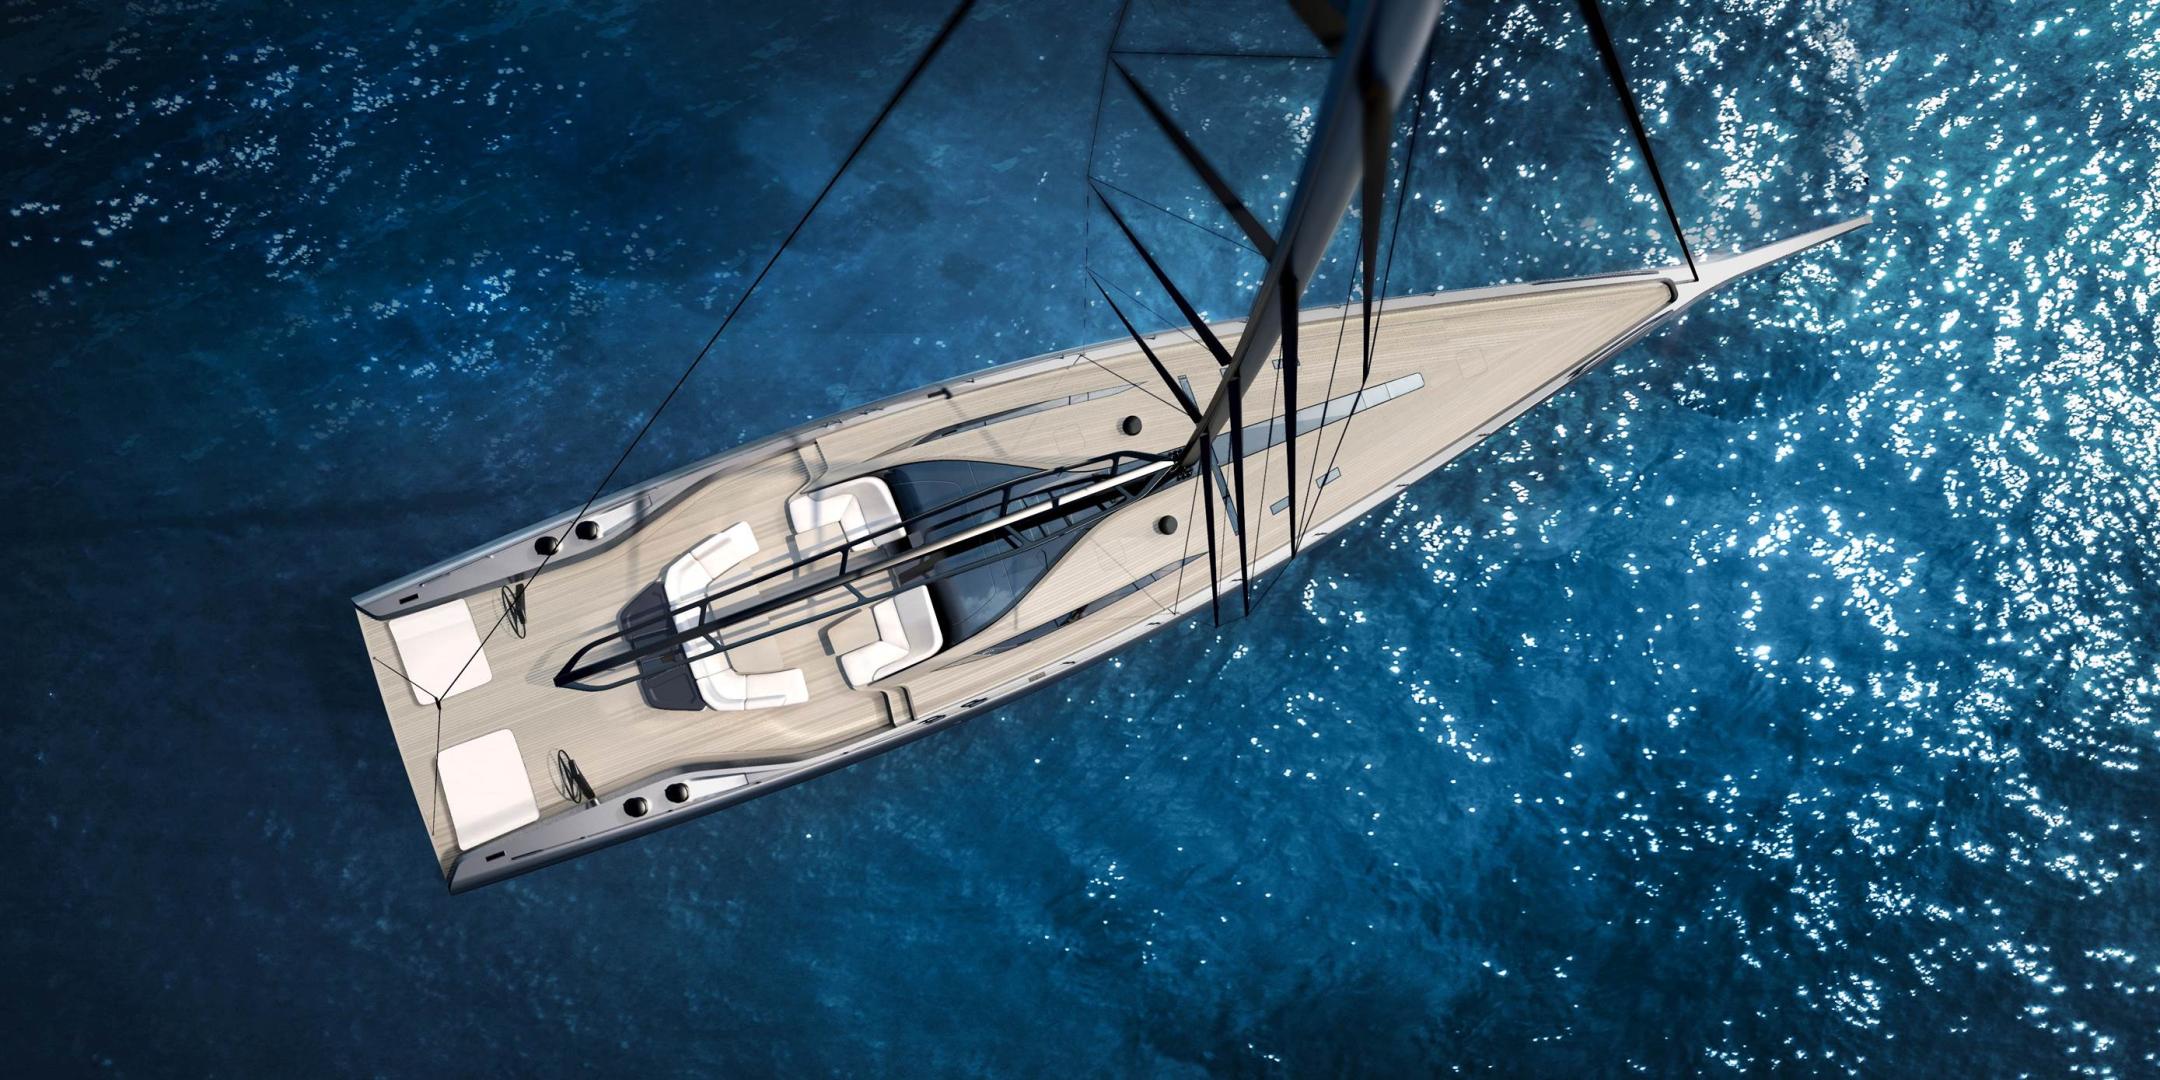 The new Wally 101-foot sailing yacht